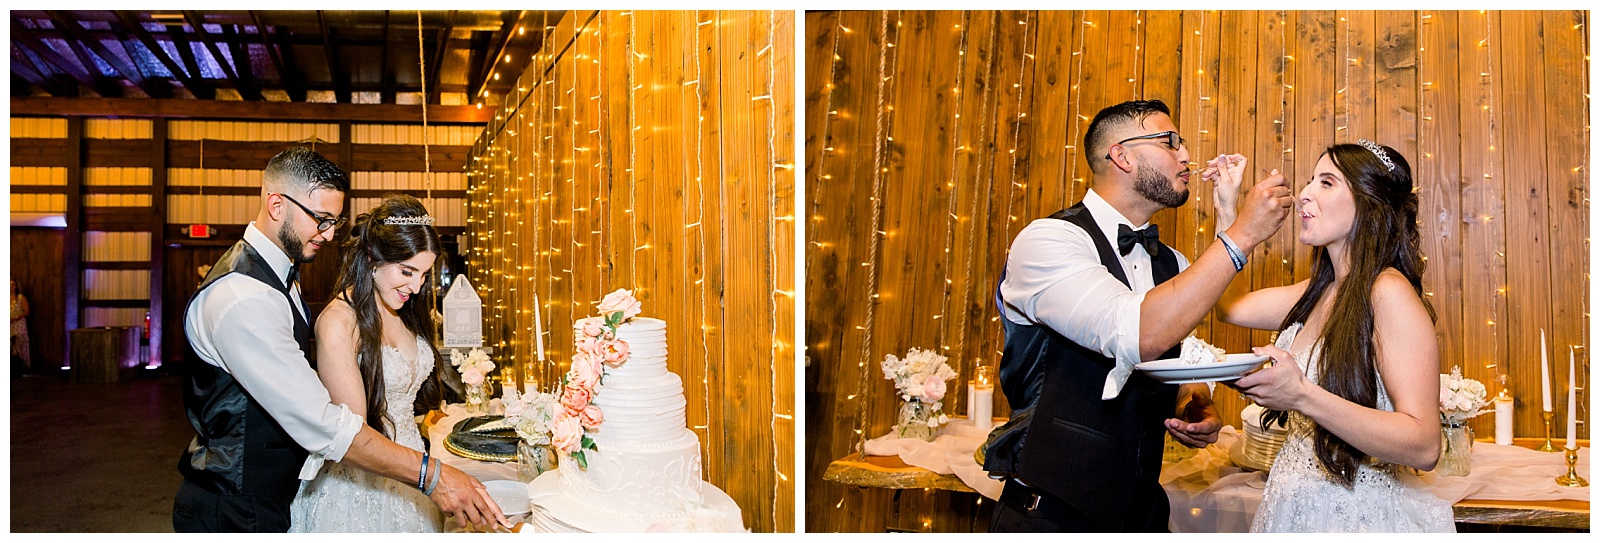 Bride and groom cutting and eating wedding cake at The Allen Farmhaus Wedding, TX by San Antonio-Maui-Destination Wedding Photographer | Monica Roberts Photography | www.monicaroberts.com